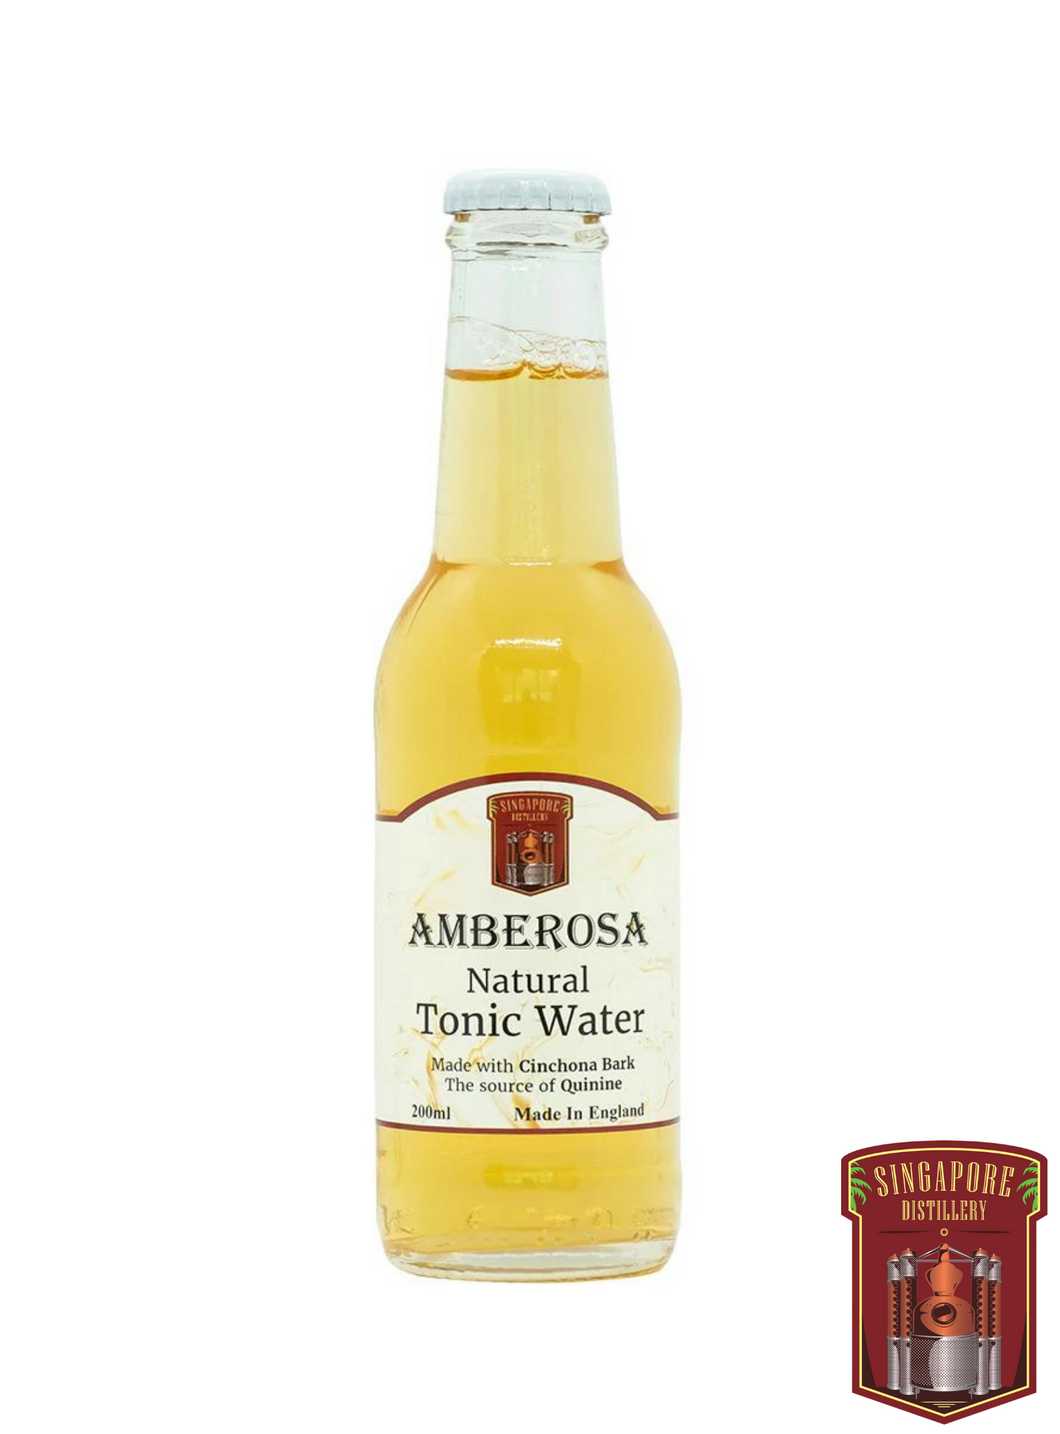 Singapore Distillery: Amberosa Natural Tonic Water - Pack of 4 (200ml)